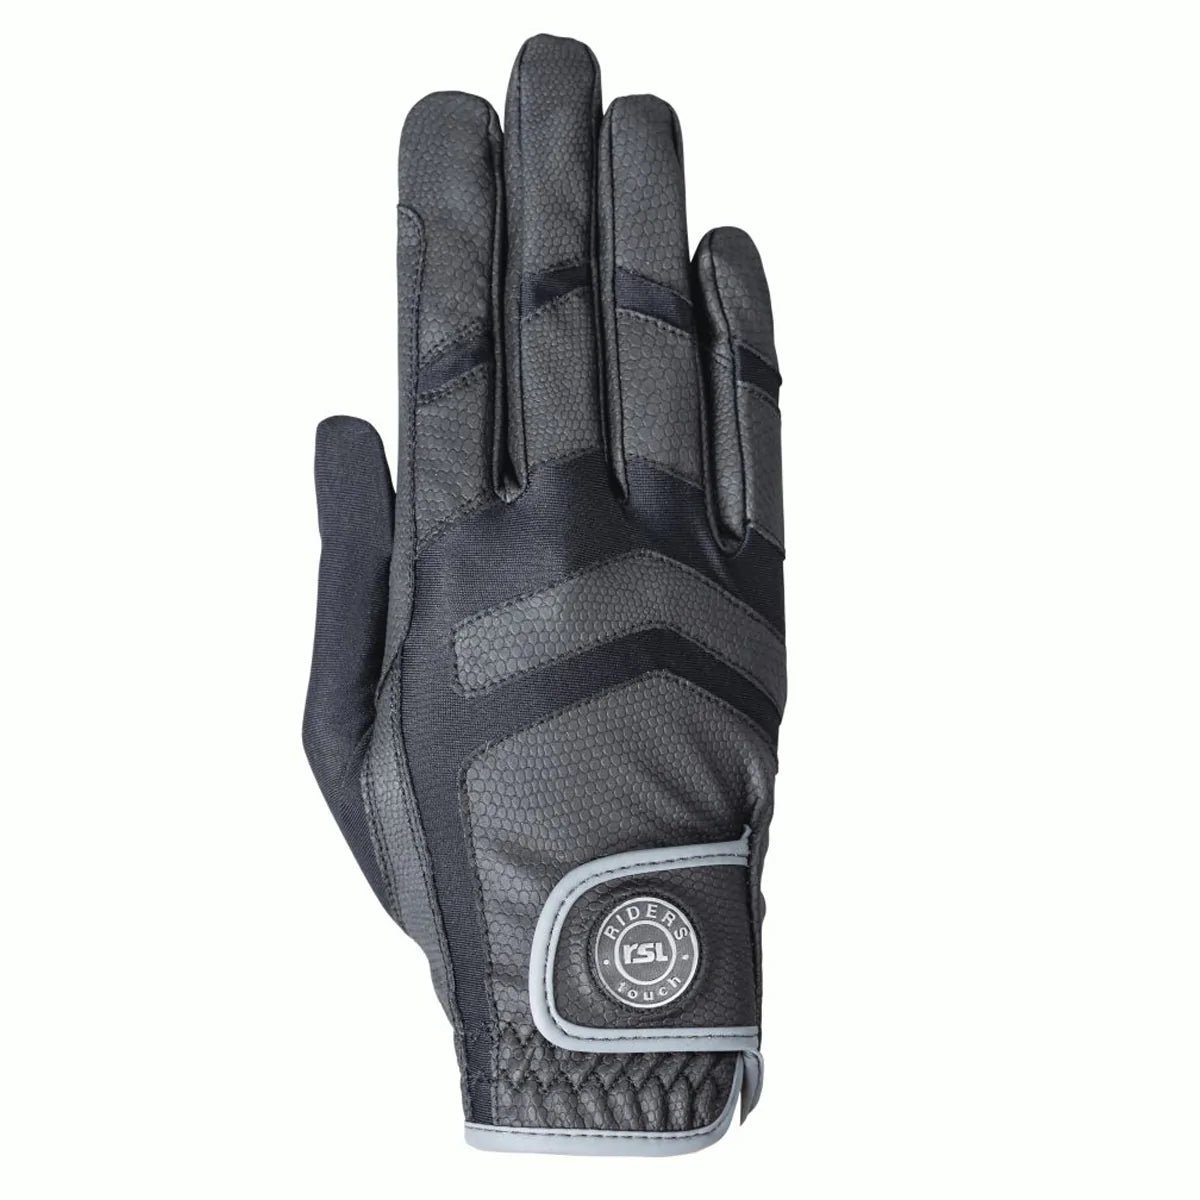 USG Palma synthetic glove